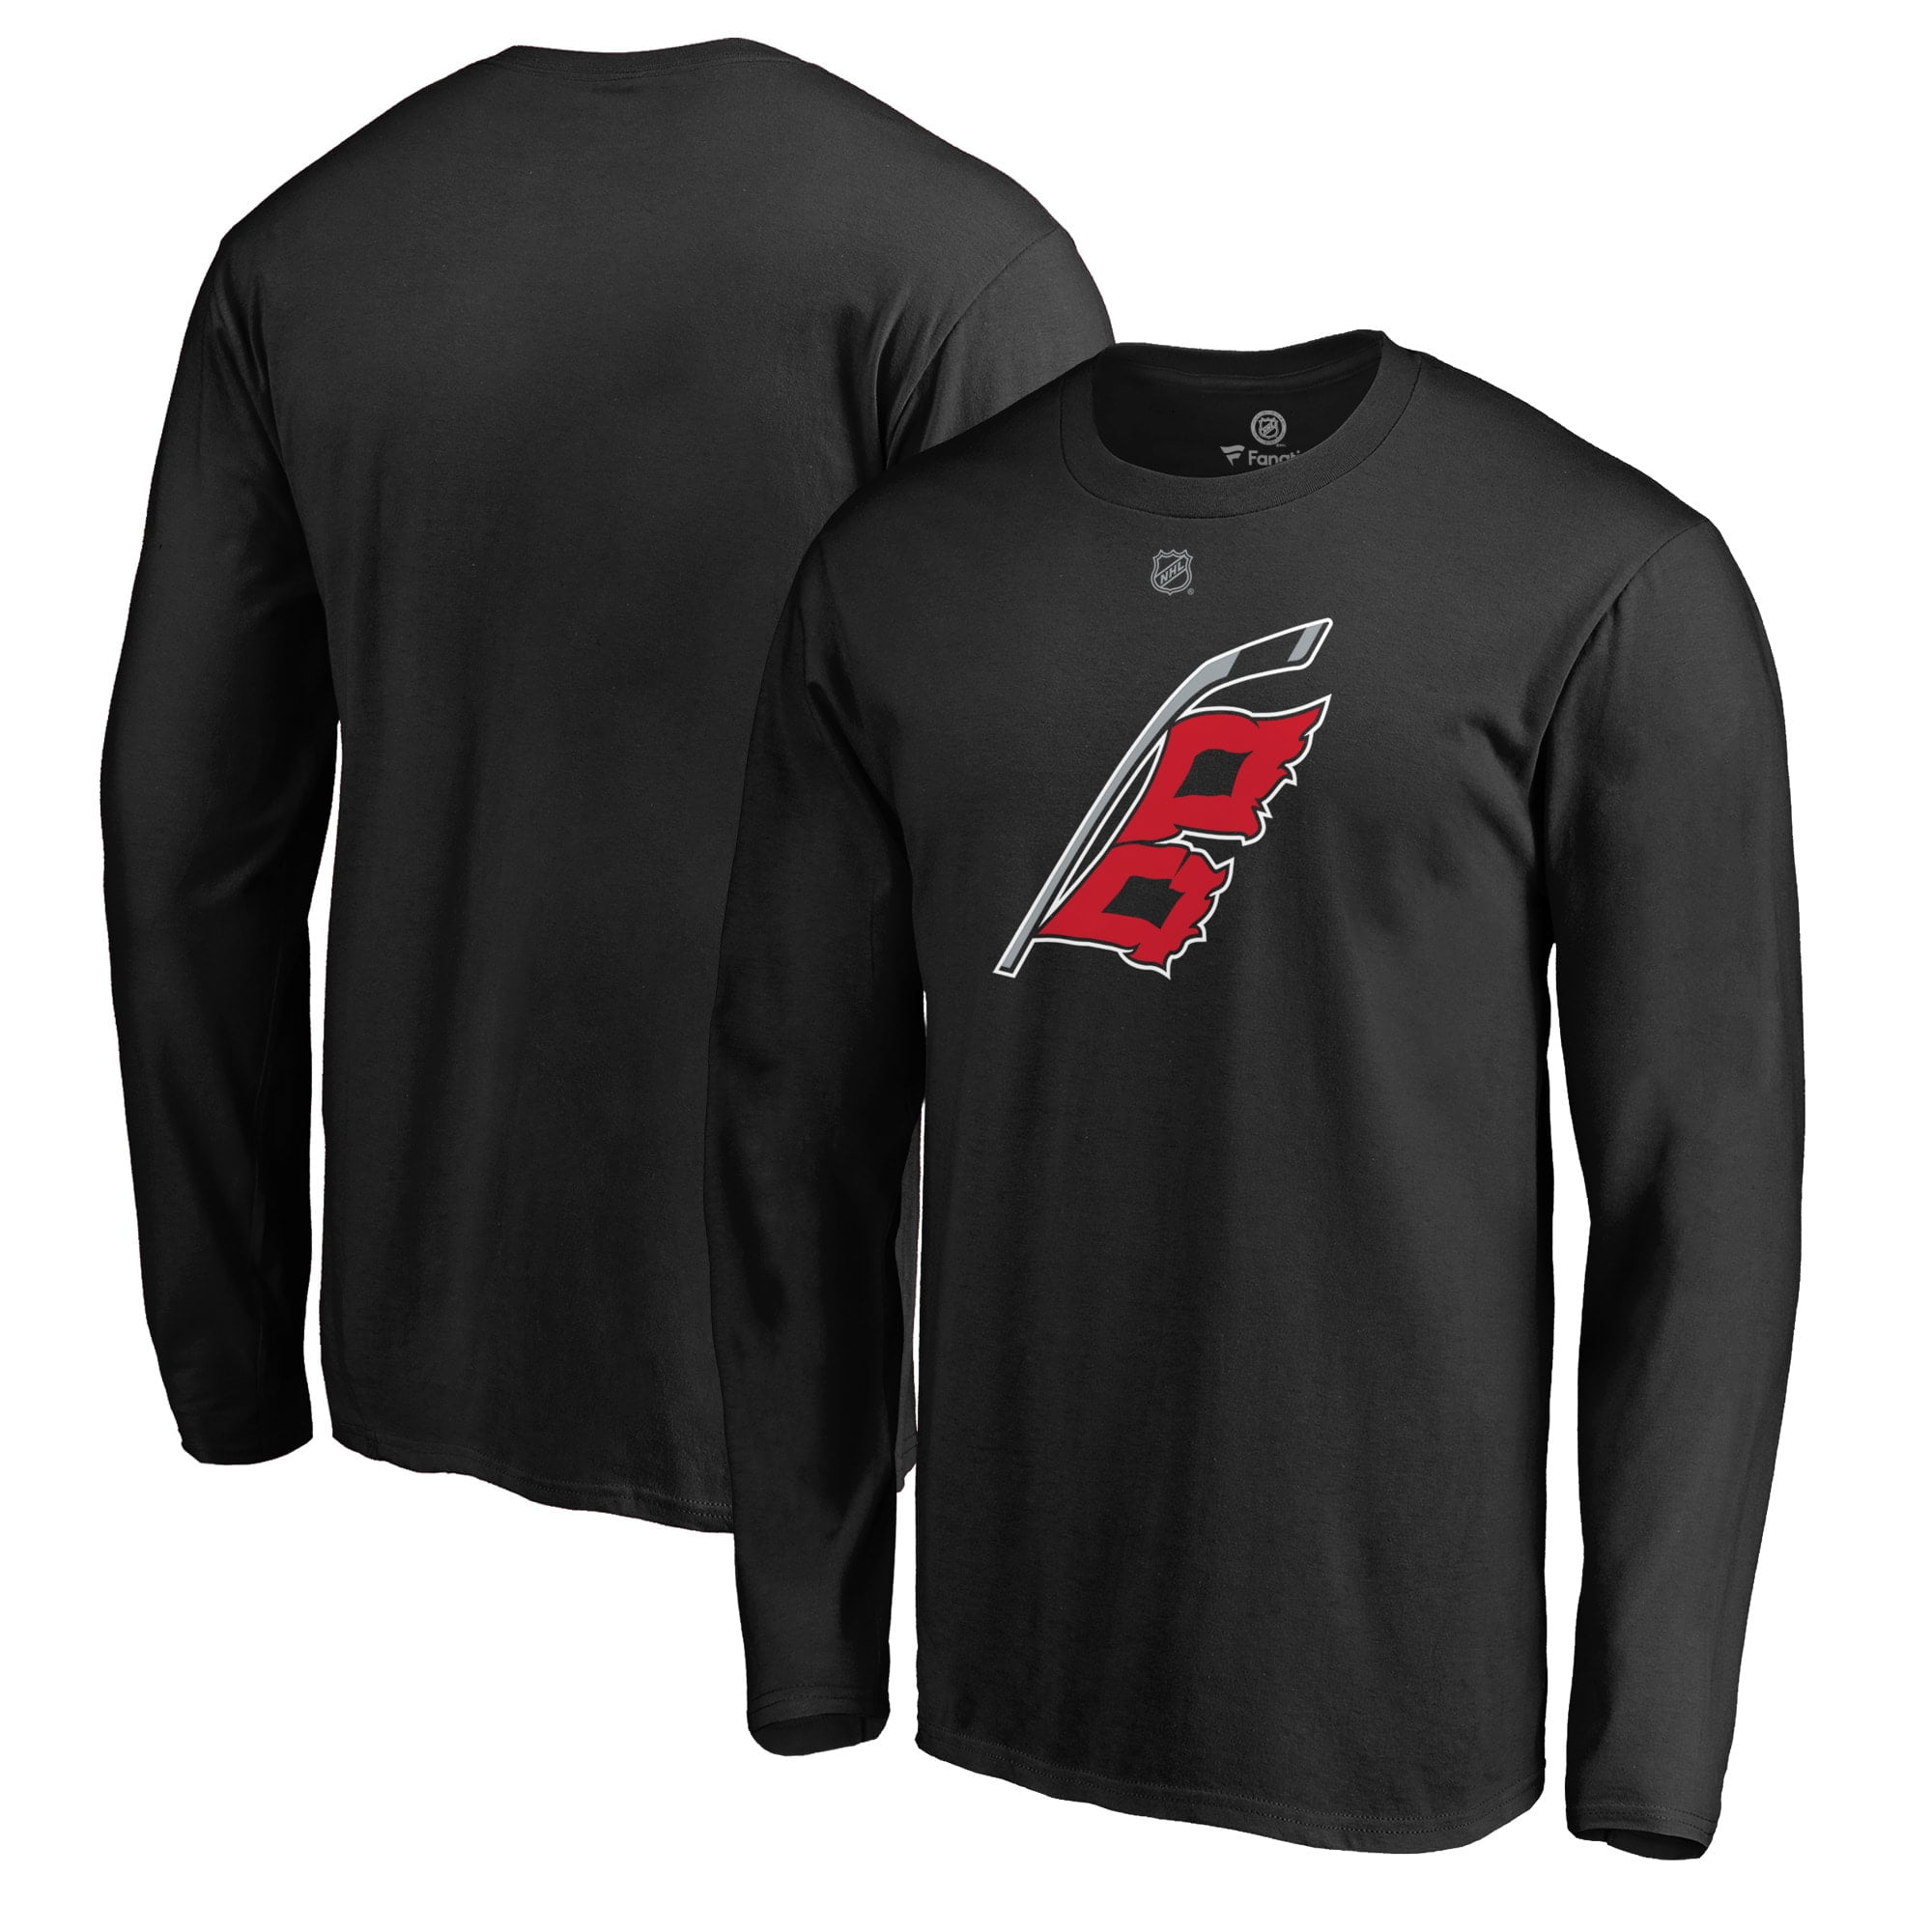 Men's Fanatics Branded Black Carolina Hurricanes Team Alternate Long Sleeve T-Shirt